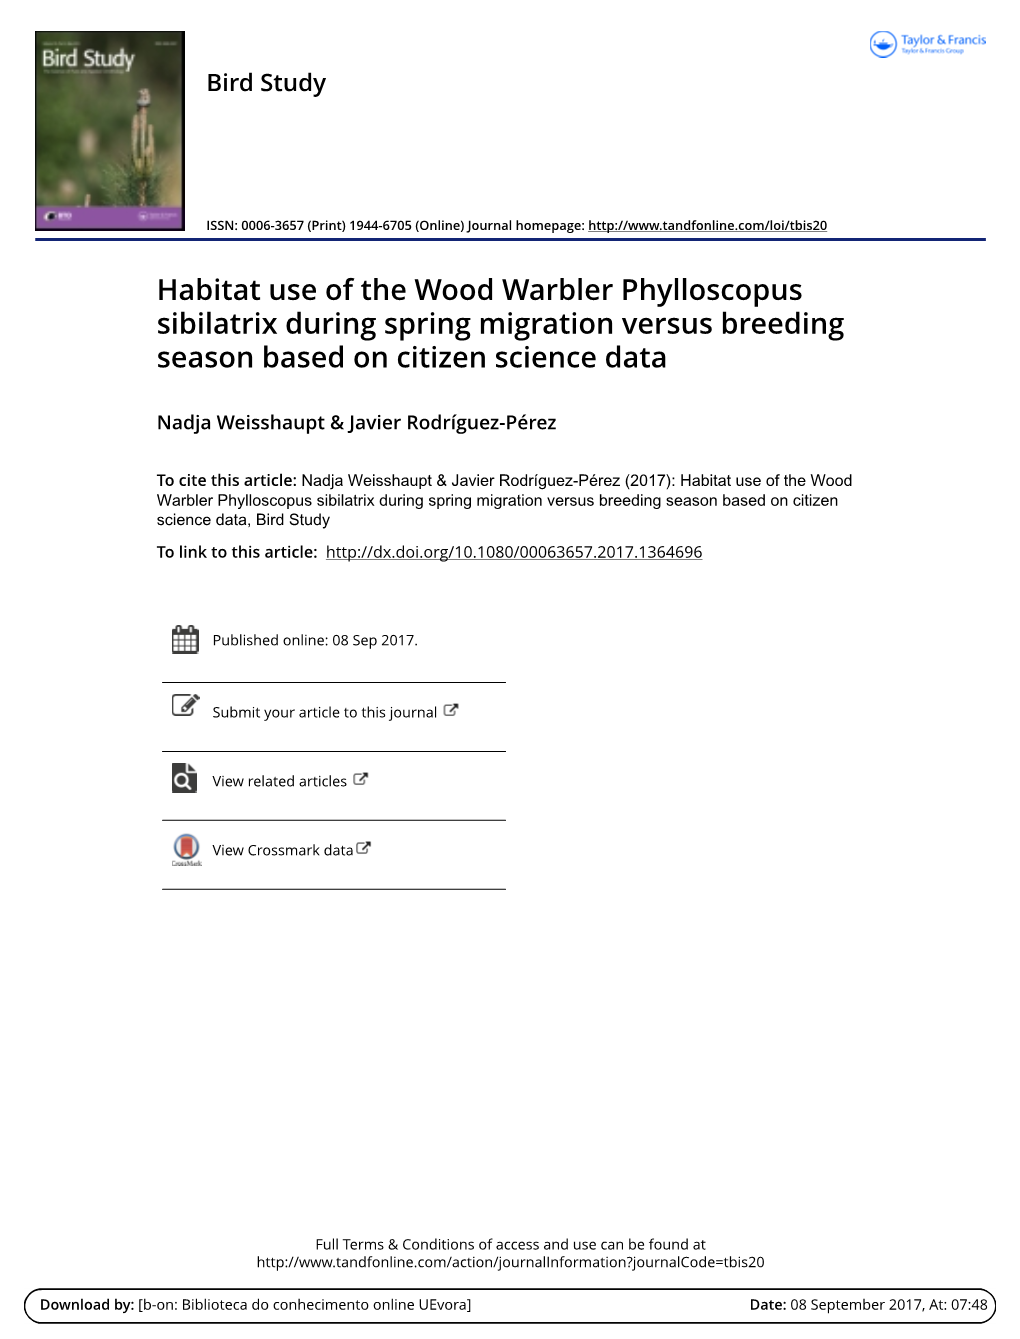 Habitat Use of the Wood Warbler Phylloscopus Sibilatrix During Spring Migration Versus Breeding Season Based on Citizen Science Data